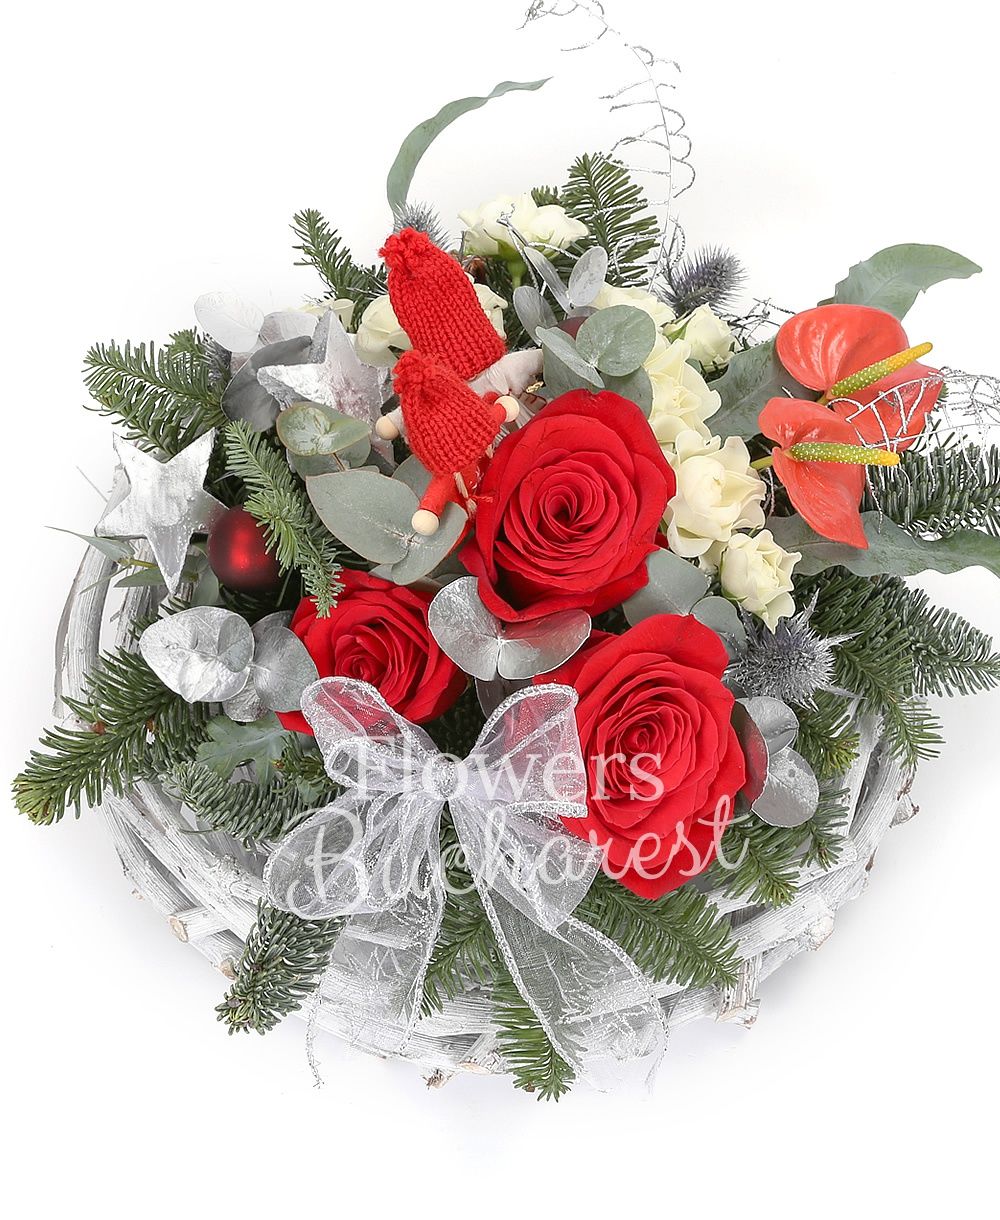 3 red roses, 3 white miniroses, 1 eryngium, 2 anthurium, silver fir, greenery, christmas decorations, basket